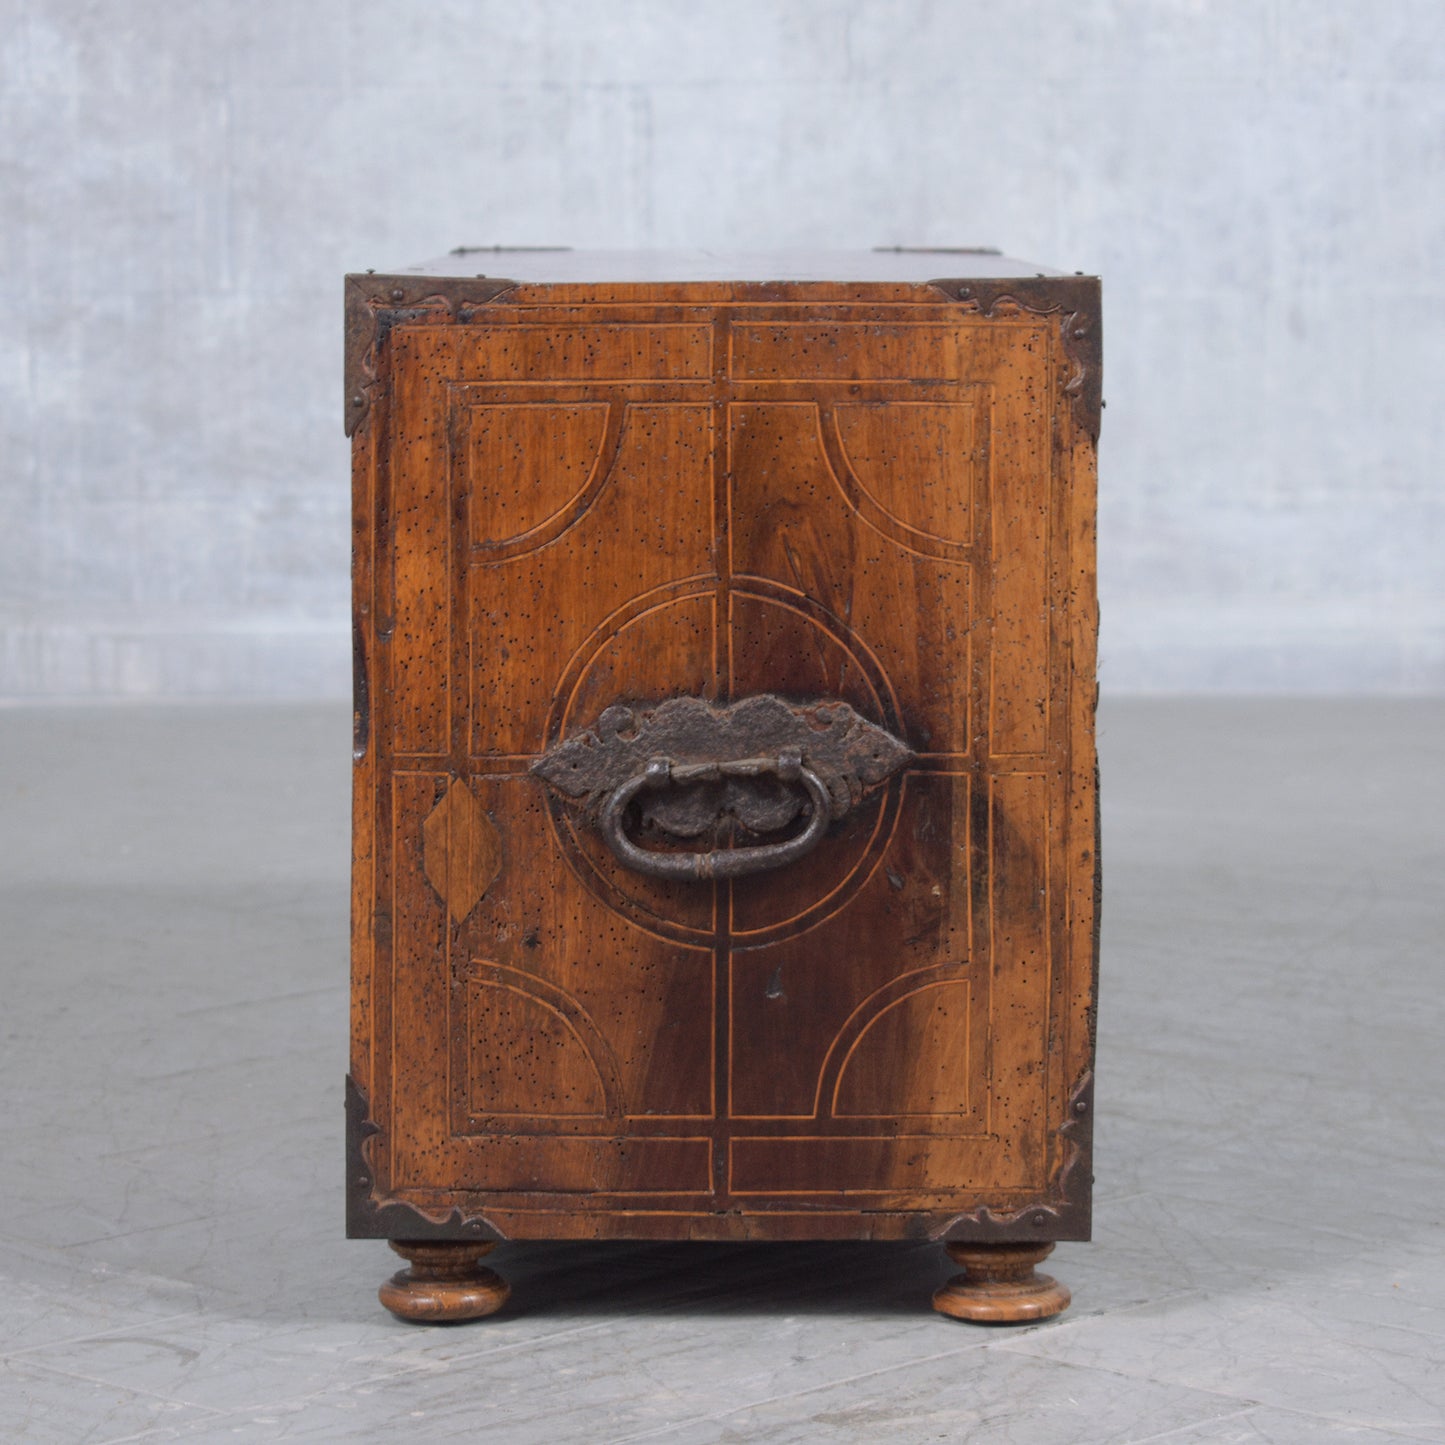 Exquisite 18th-Century Spanish Barqueño Cabinet: Walnut with Marquetry Inlays